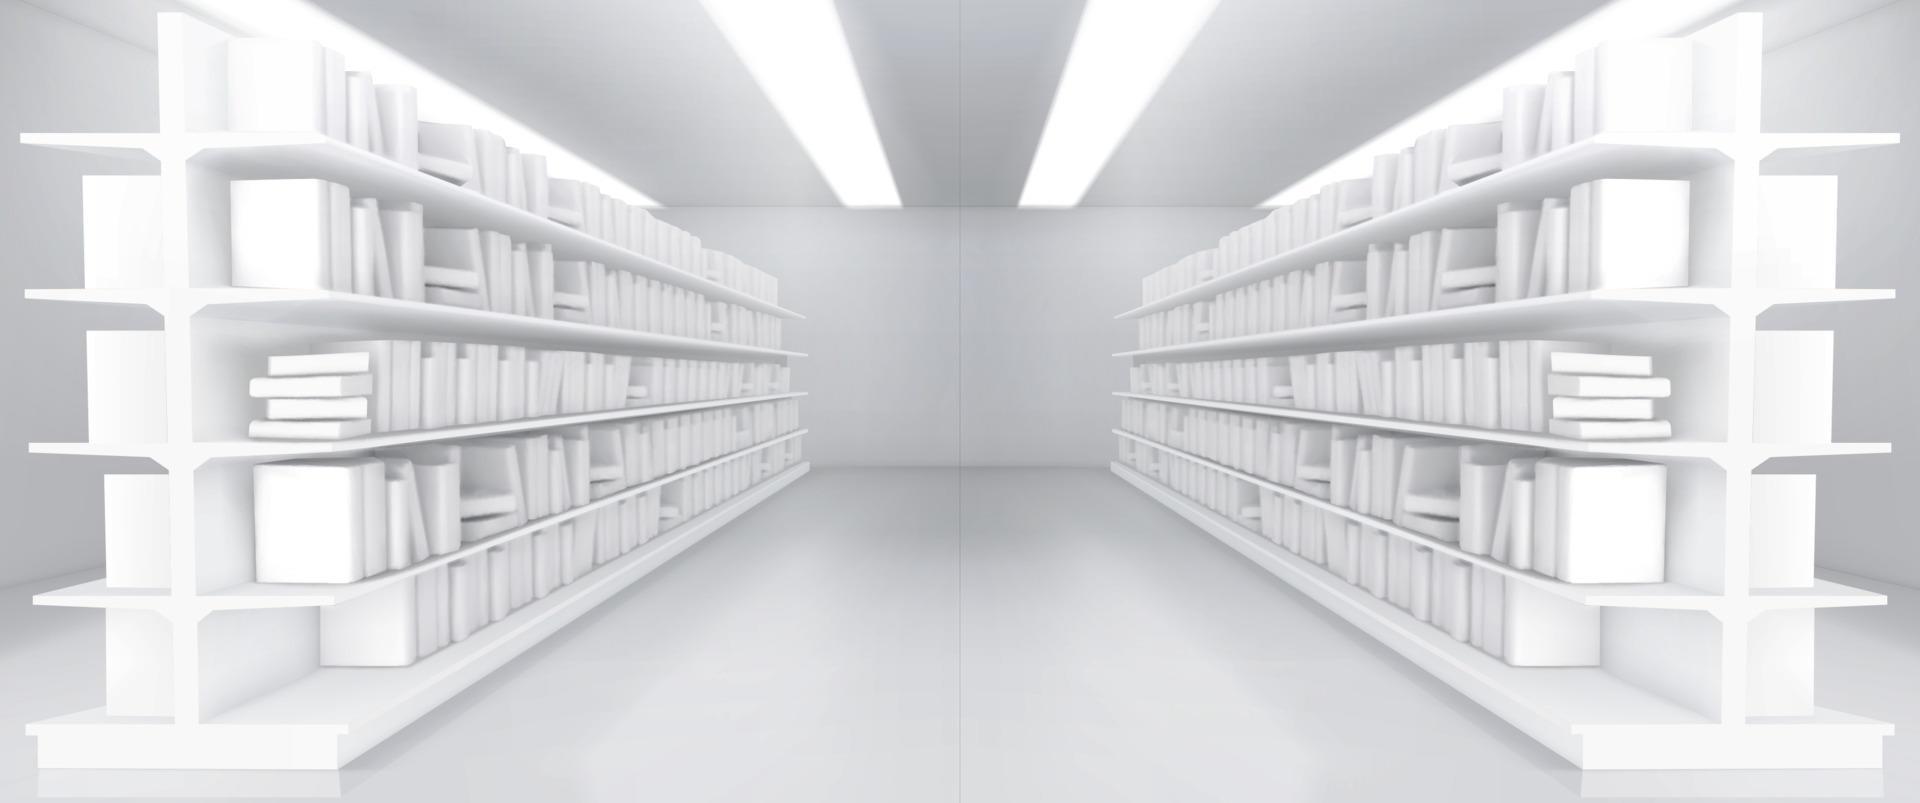 realista biblioteca pasillo Bosquejo vector